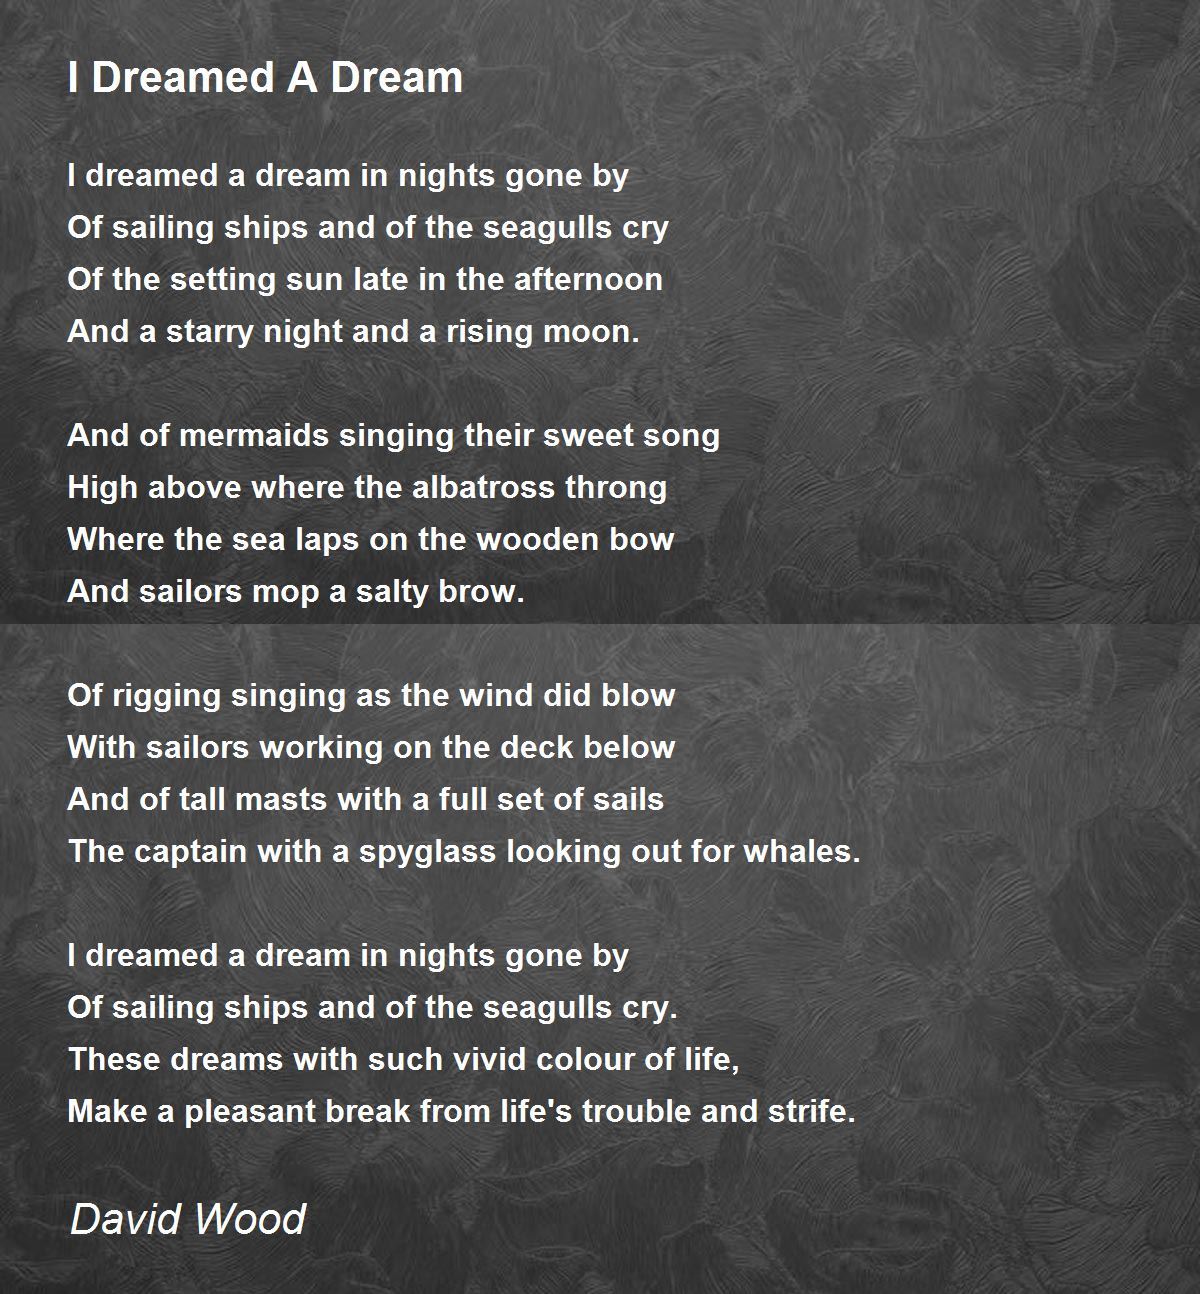 I Dreamed A Dream - I Dreamed A Dream Poem by David Wood